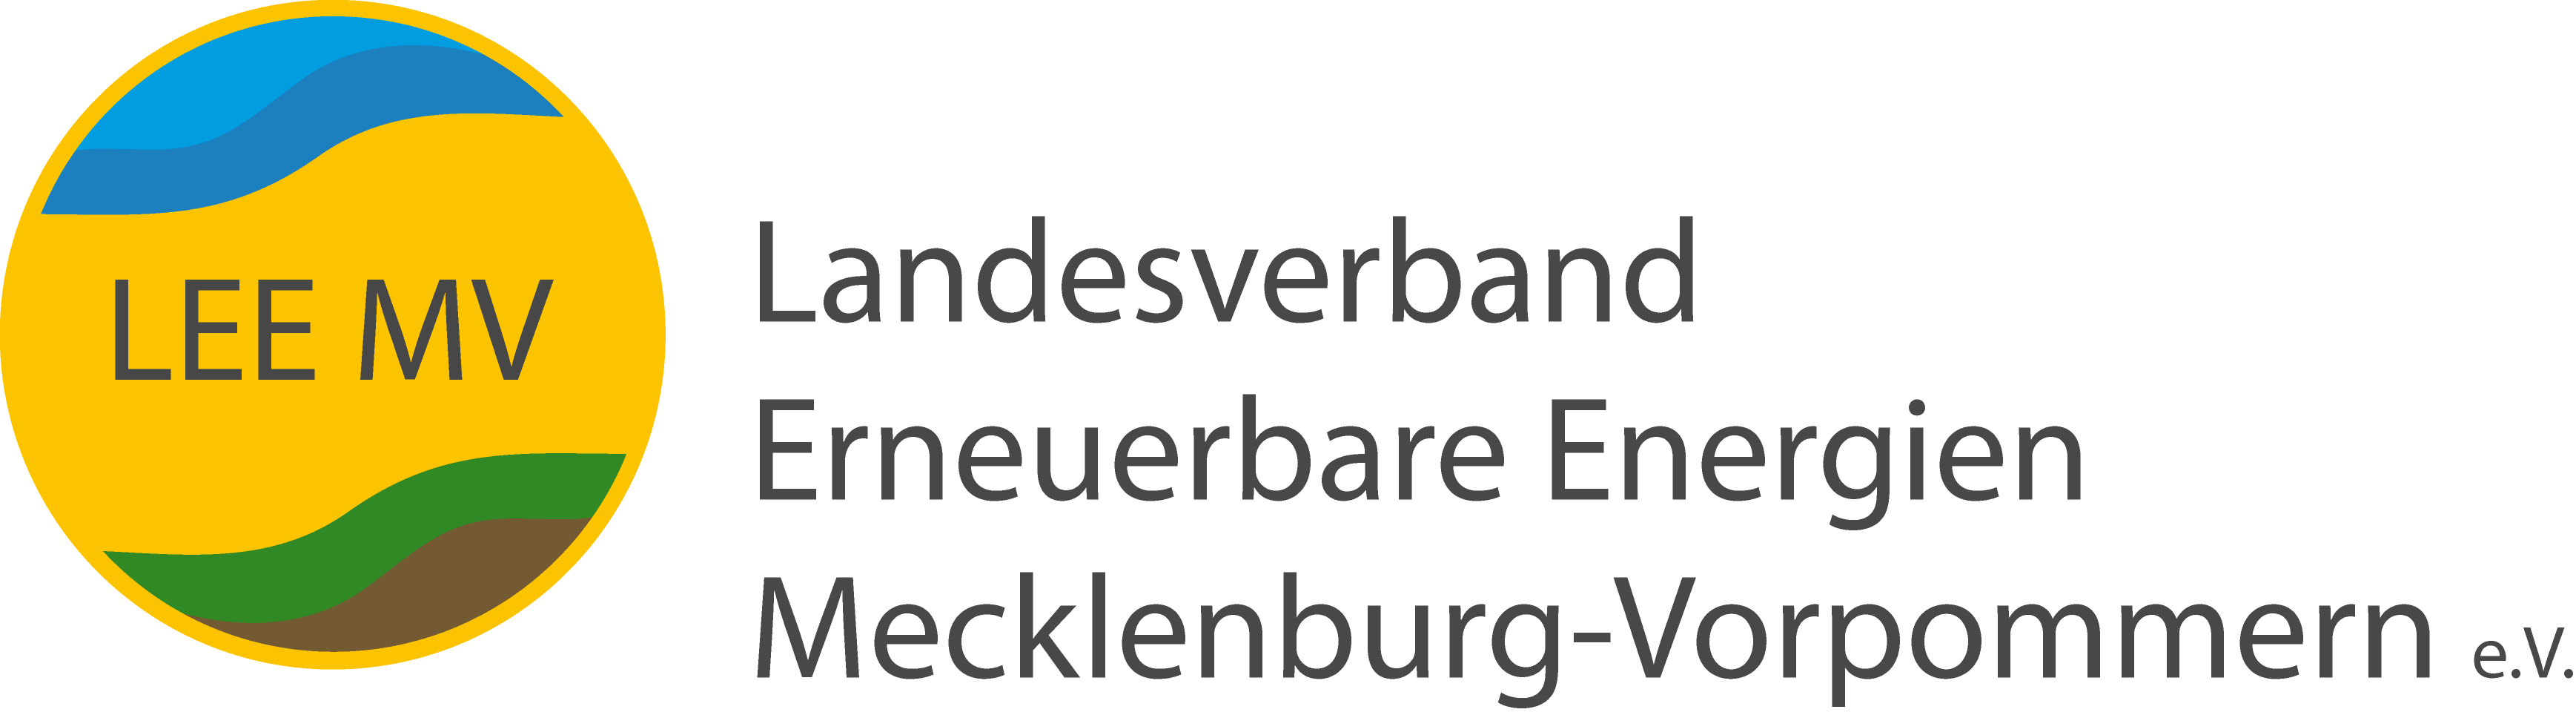 Logo: Landesverband Erneuerbare Energien Mecklenburg-Vorpommern